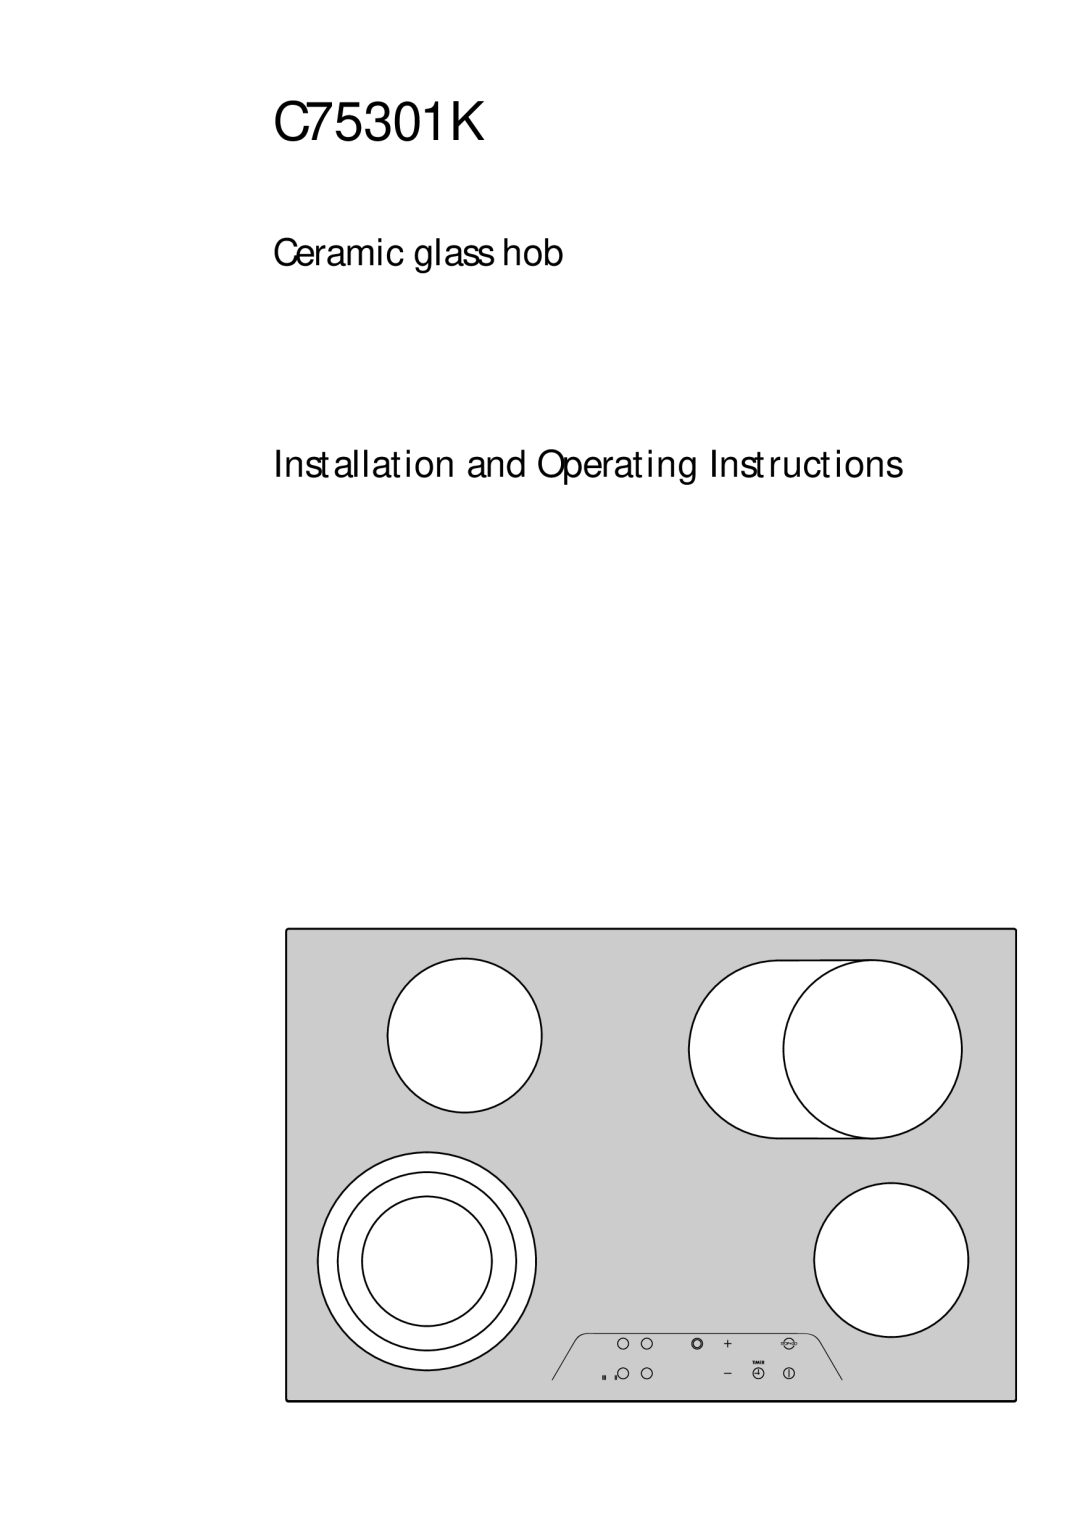 Electrolux C75301K operating instructions Ceramic glass hob, Installation and Operating Instructions 